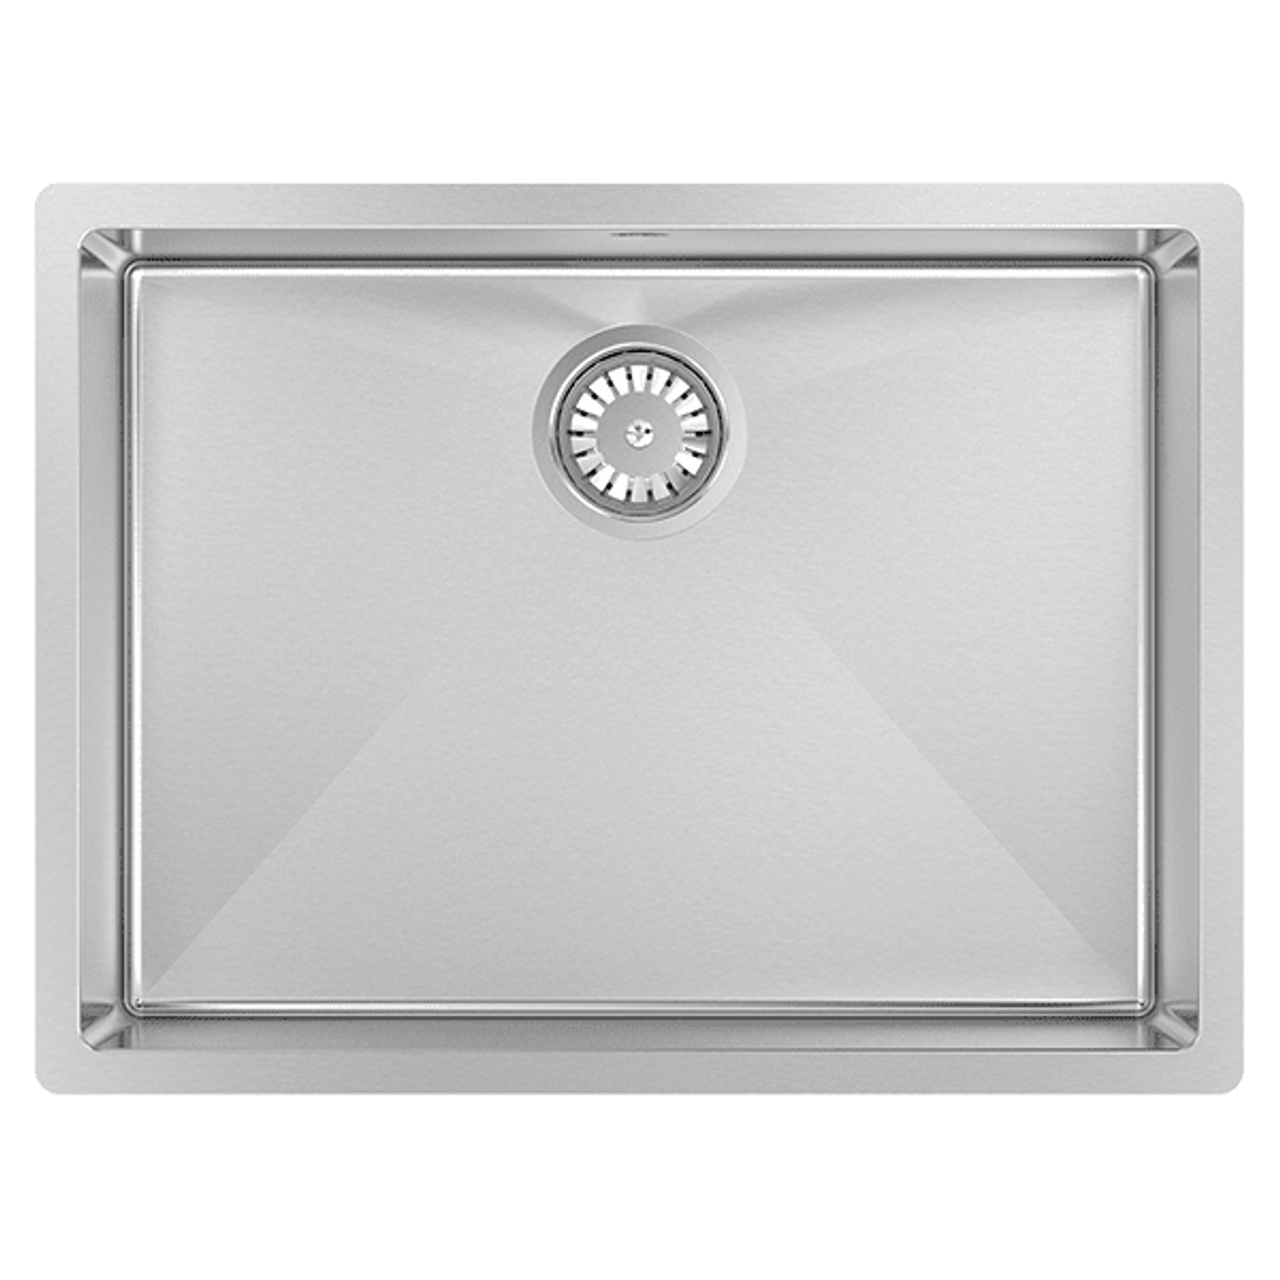 FRA540 - Alfresco 540 Large Bowl Sink - Stainless Steel